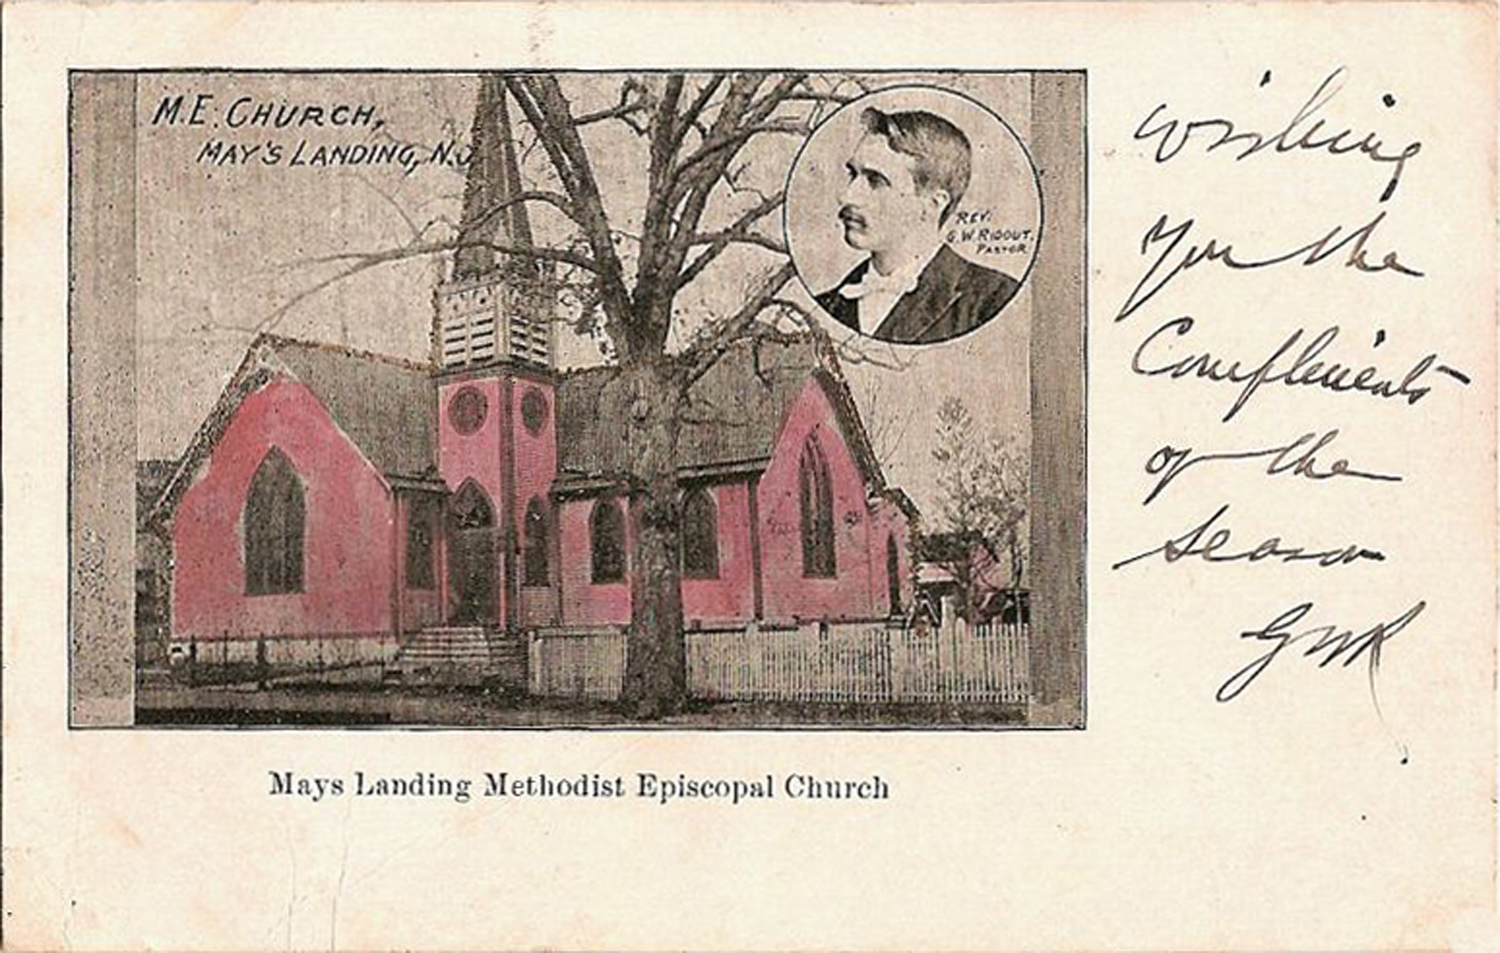 Mays Landing - Methodist Episcopal Church - Pastor G W Ridout - 1906